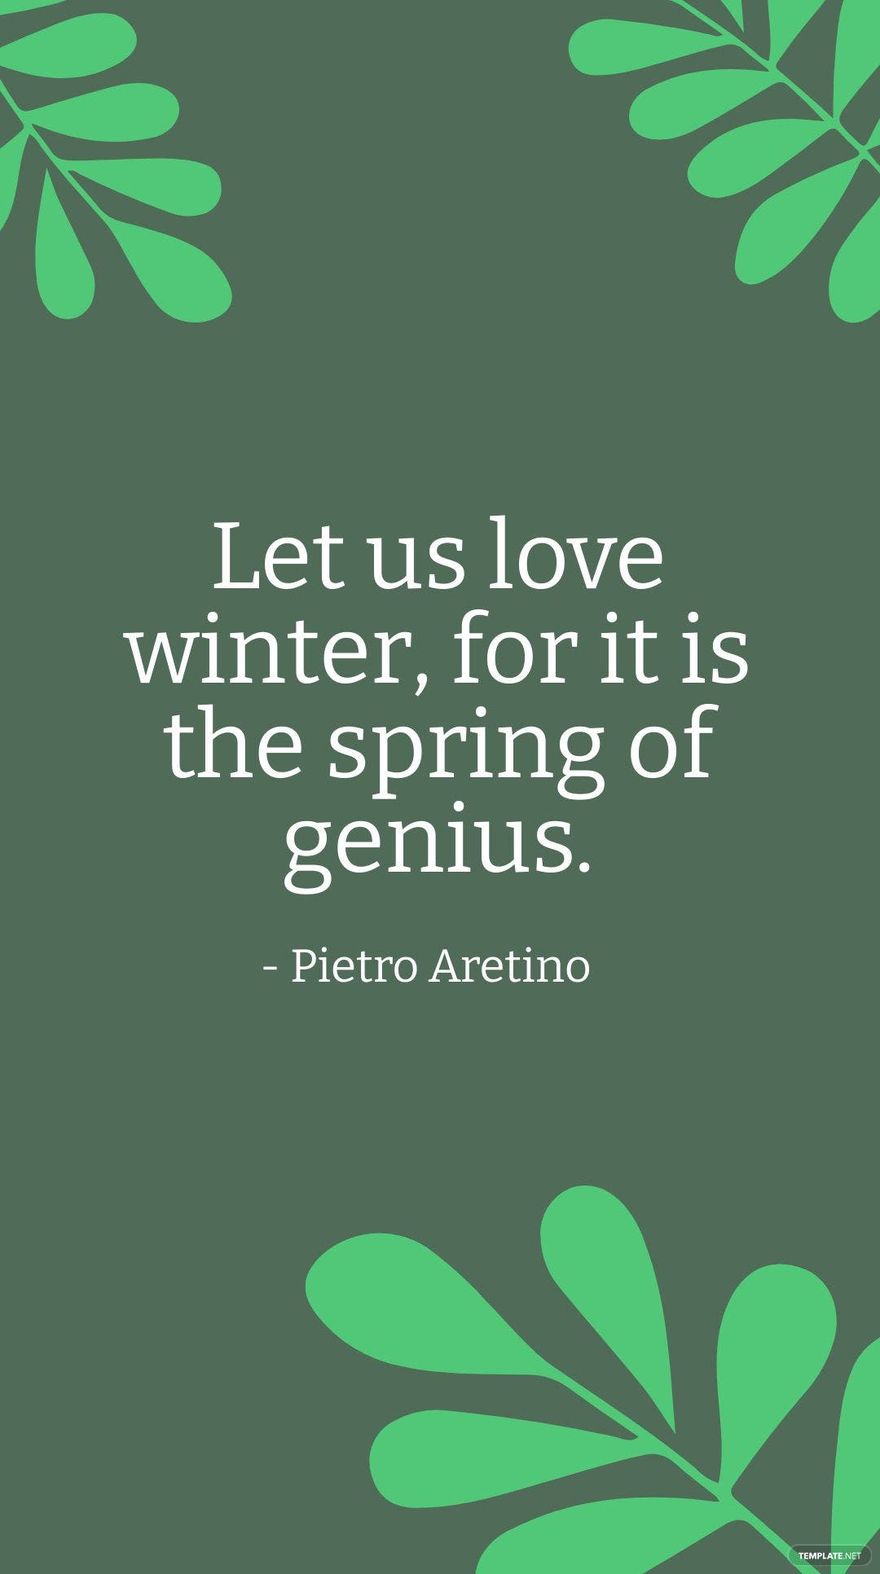 Pietro Aretino - Let us love winter, for it is the spring of genius.